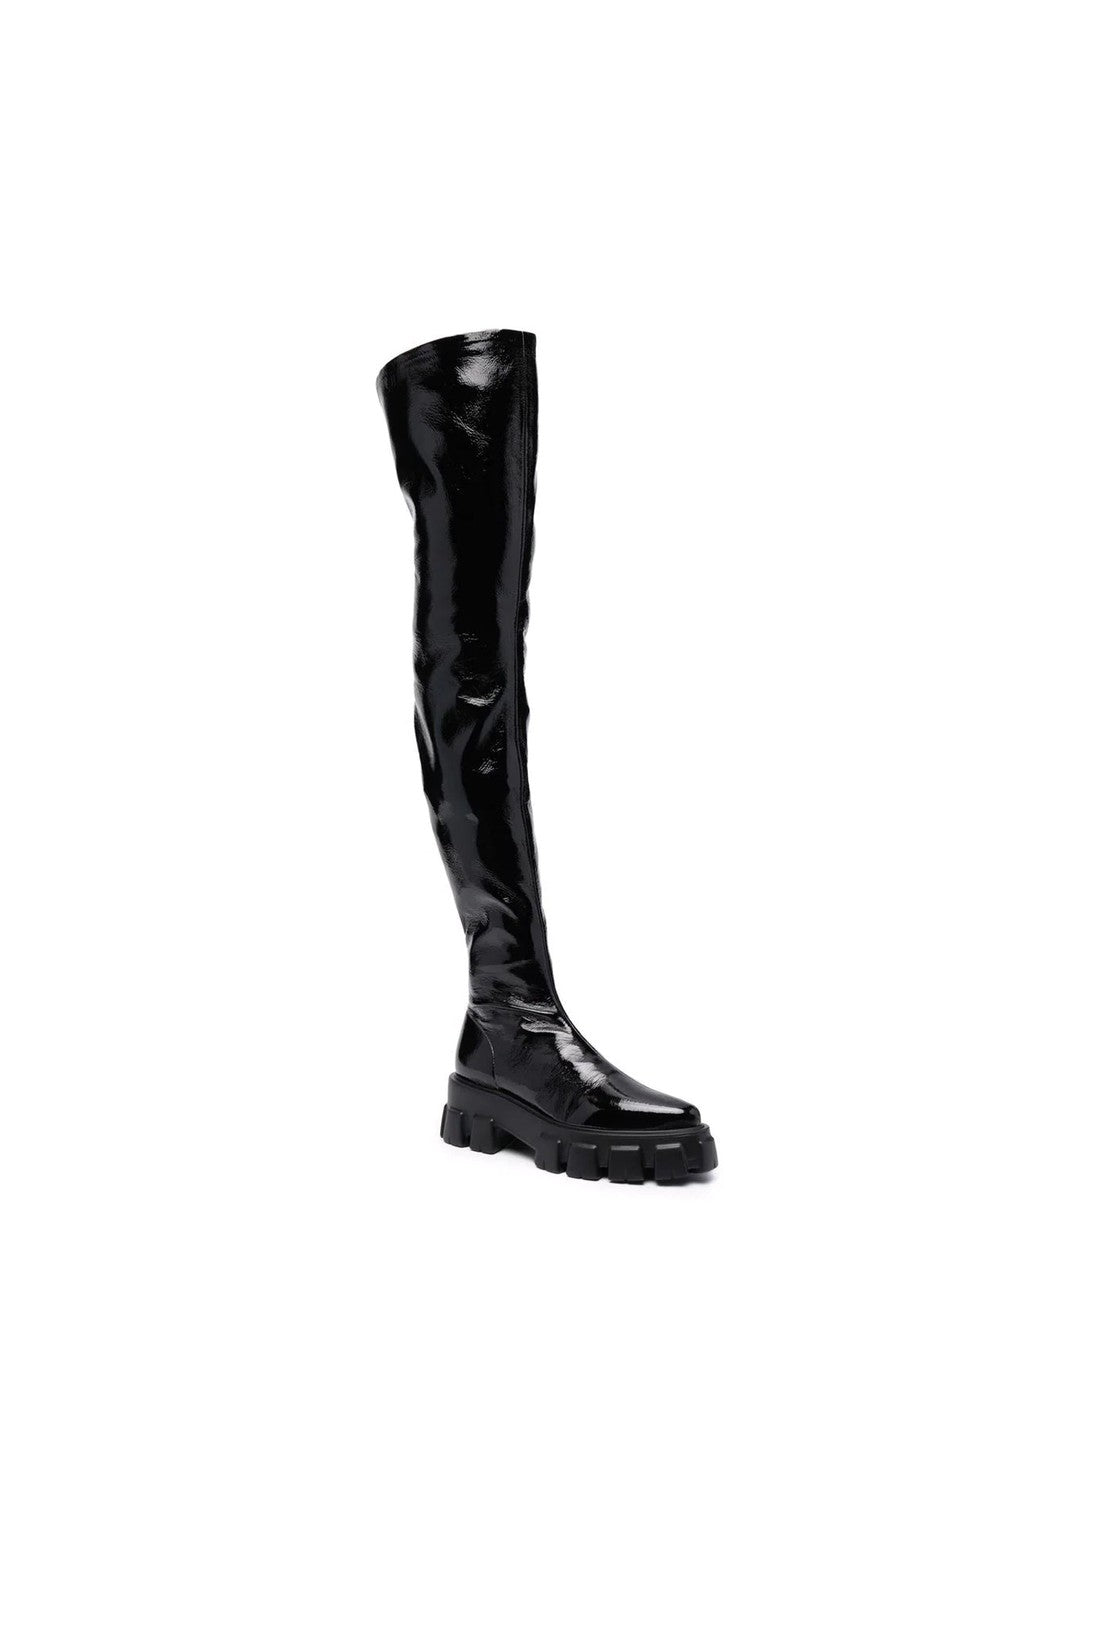 PRADA-Outlet-Sale-Prada Thigh-High Boots-WOMEN SHOES-ARCHIVIST